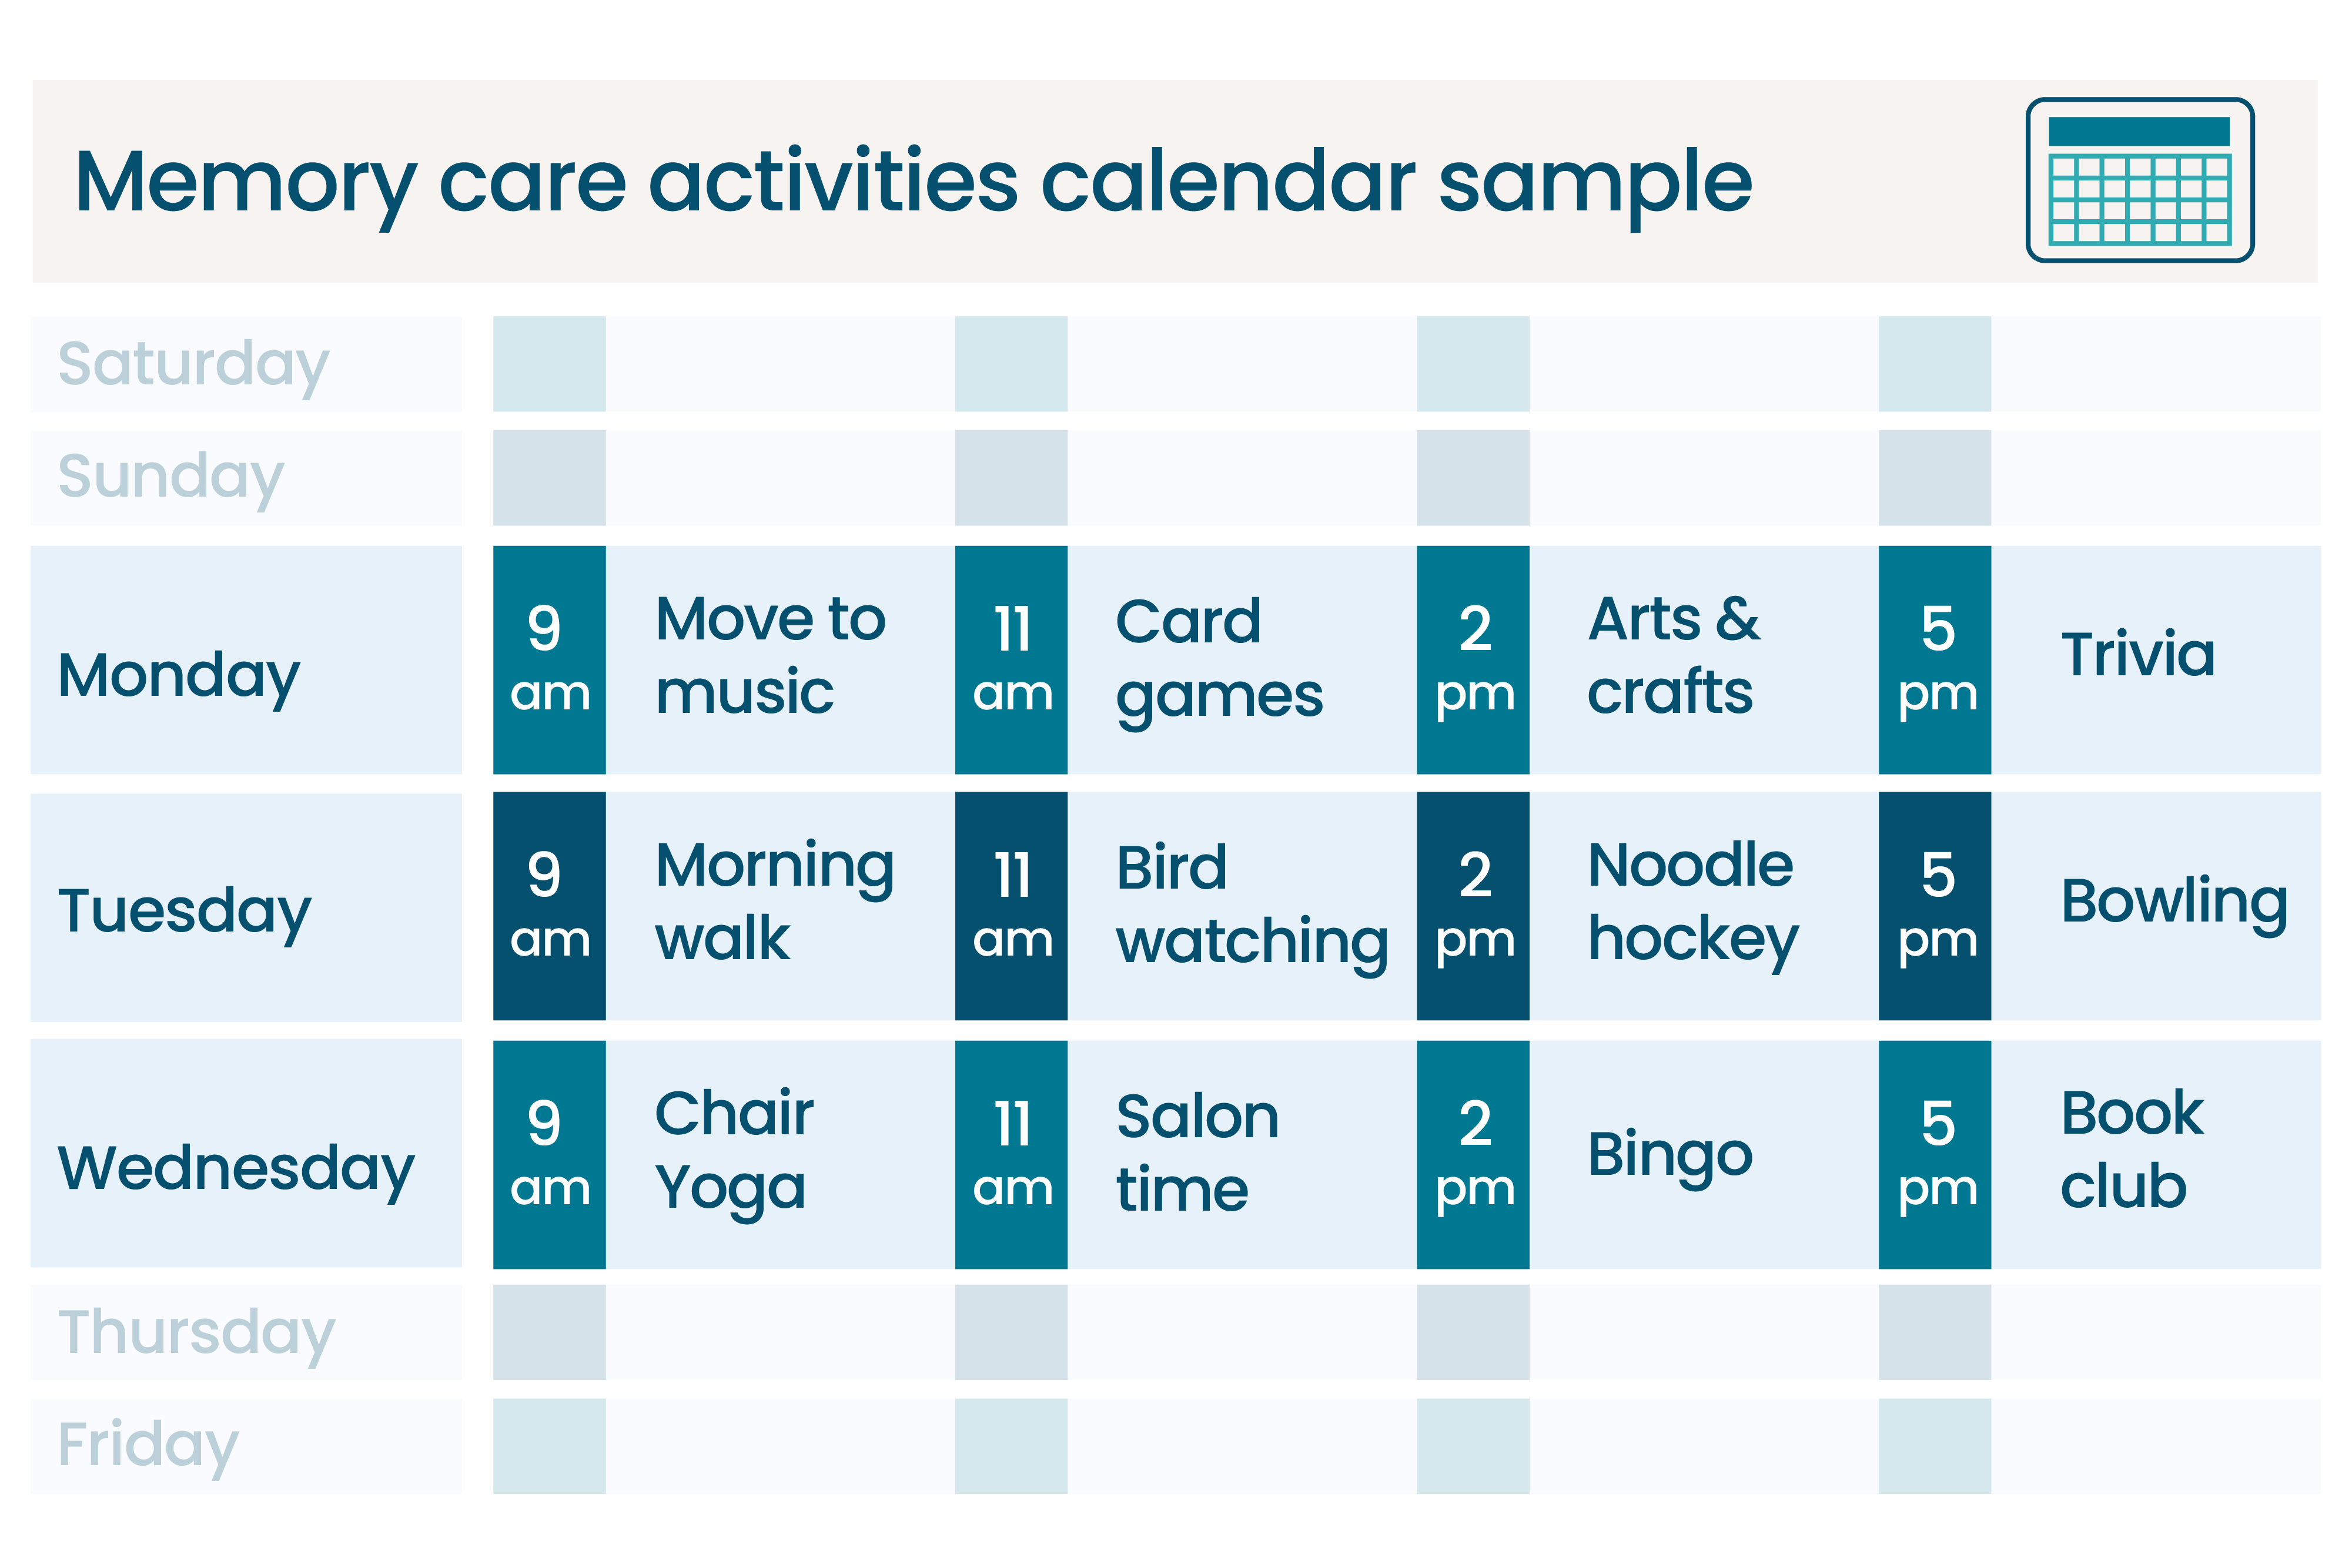 A sample calendar of memory care activities.